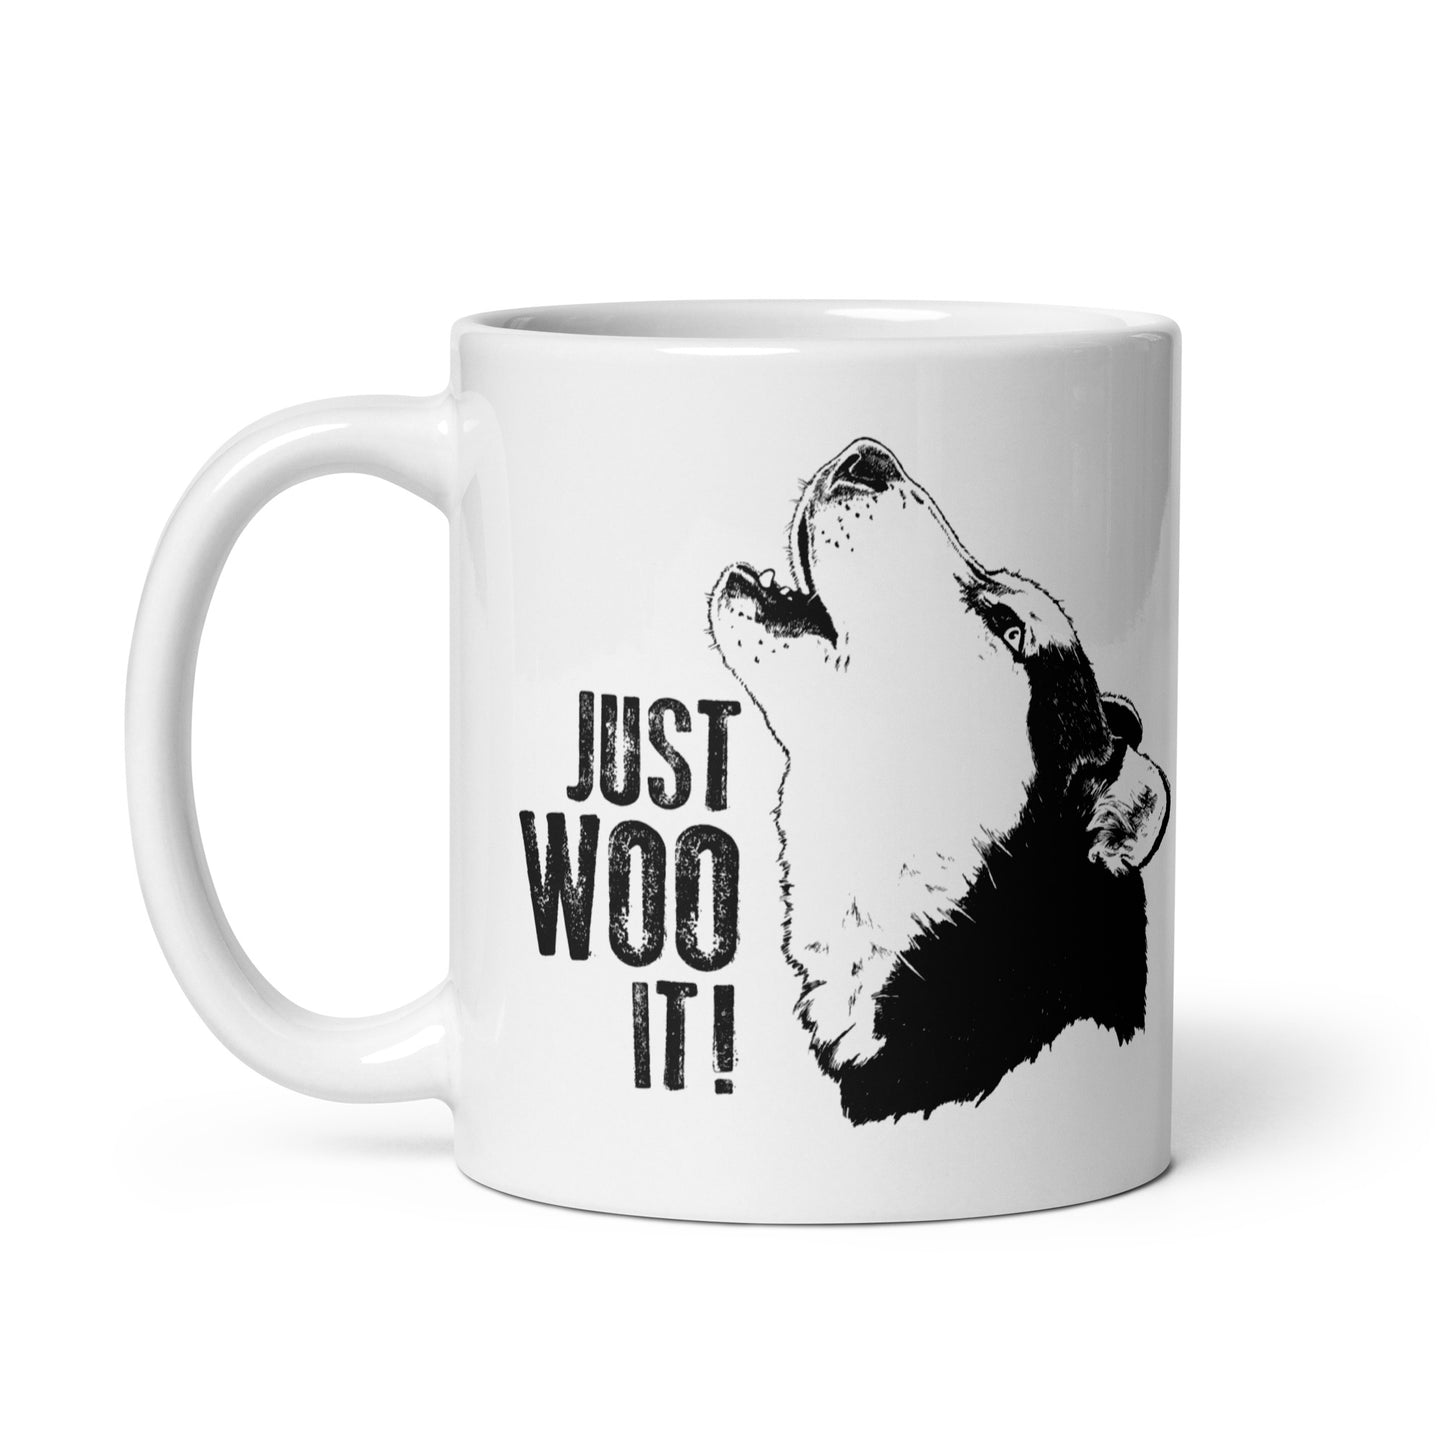 JUST WOO IT! - Siberian Husky - Coffee Mug